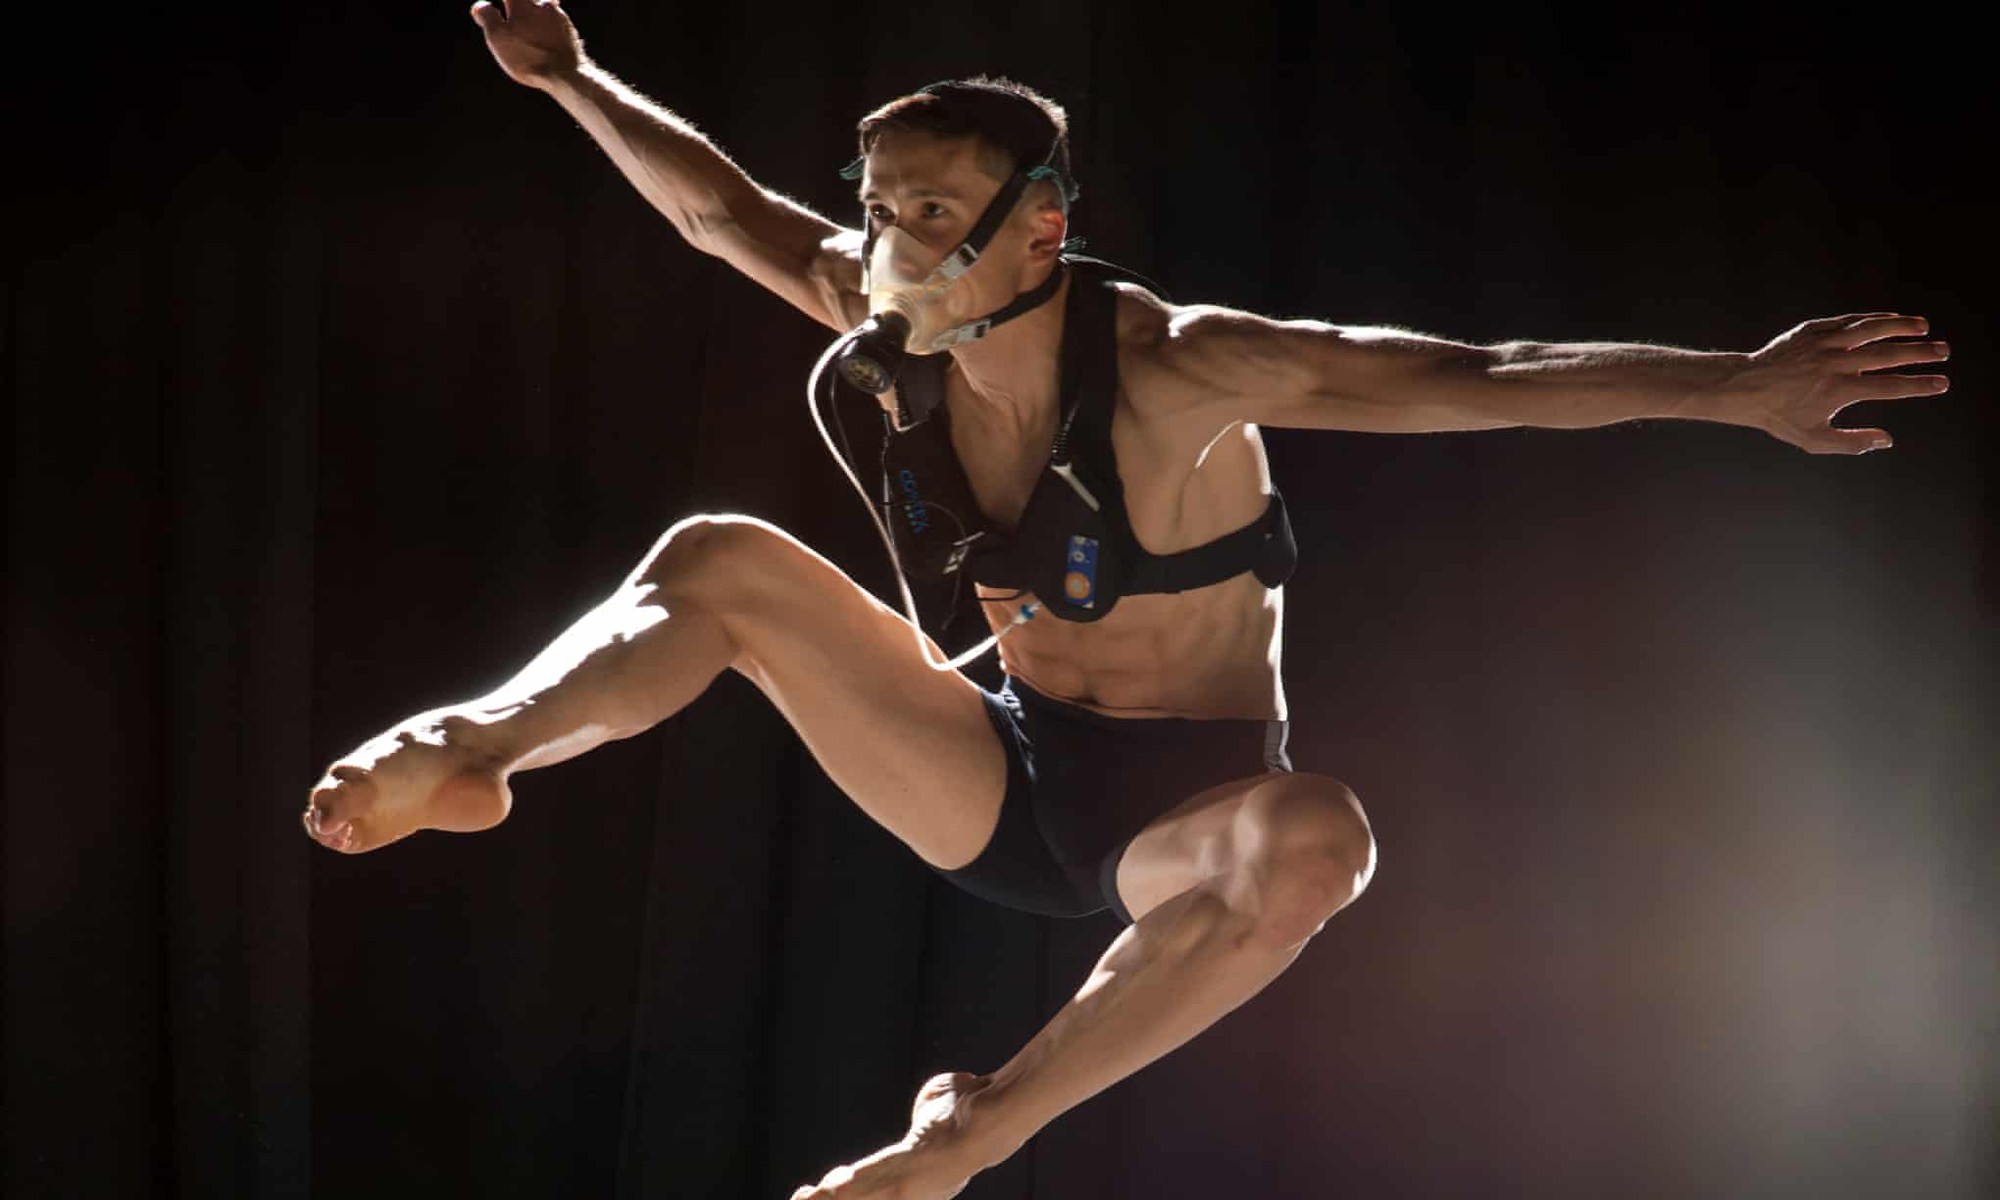 Bailarines: una Mirada Interdisciplinaria